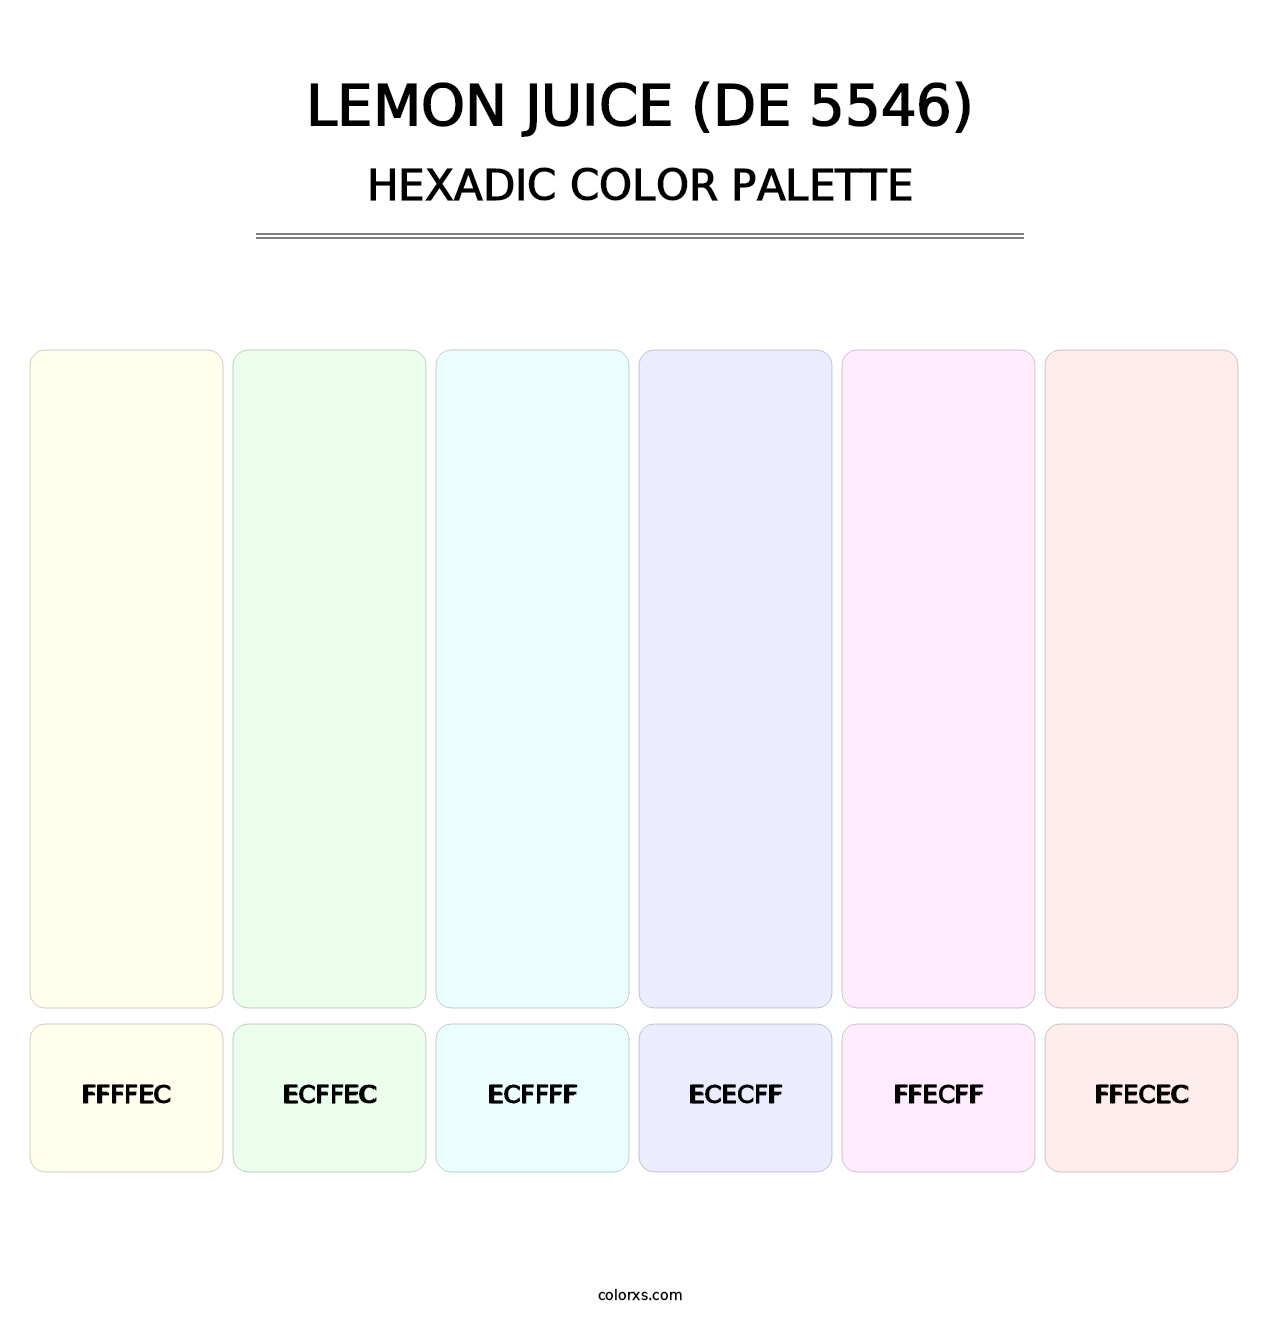 Lemon Juice (DE 5546) - Hexadic Color Palette